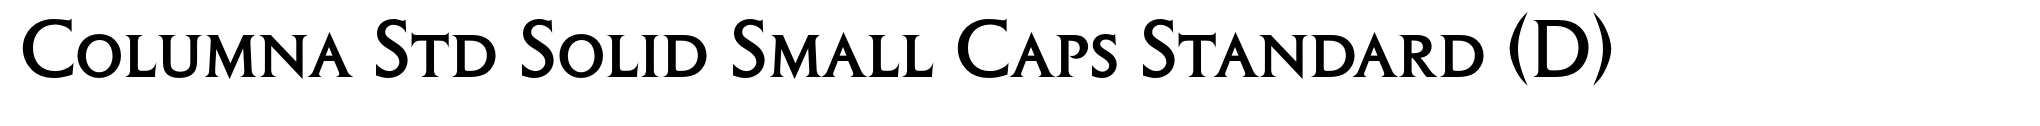 Columna Std Solid Small Caps Standard (D) image